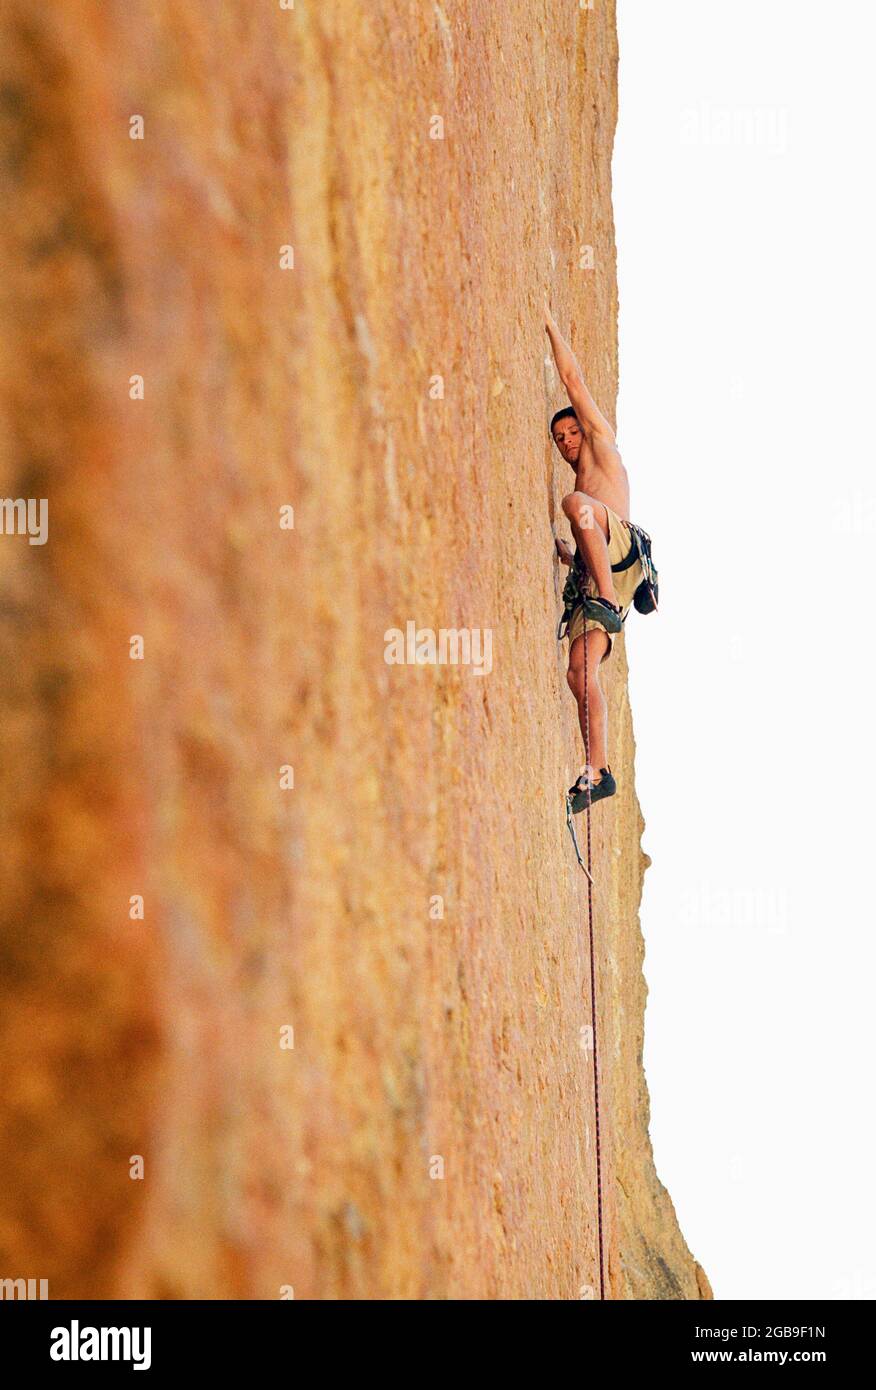 A young man rock climbing on a vertcal cliffside. Stock Photo